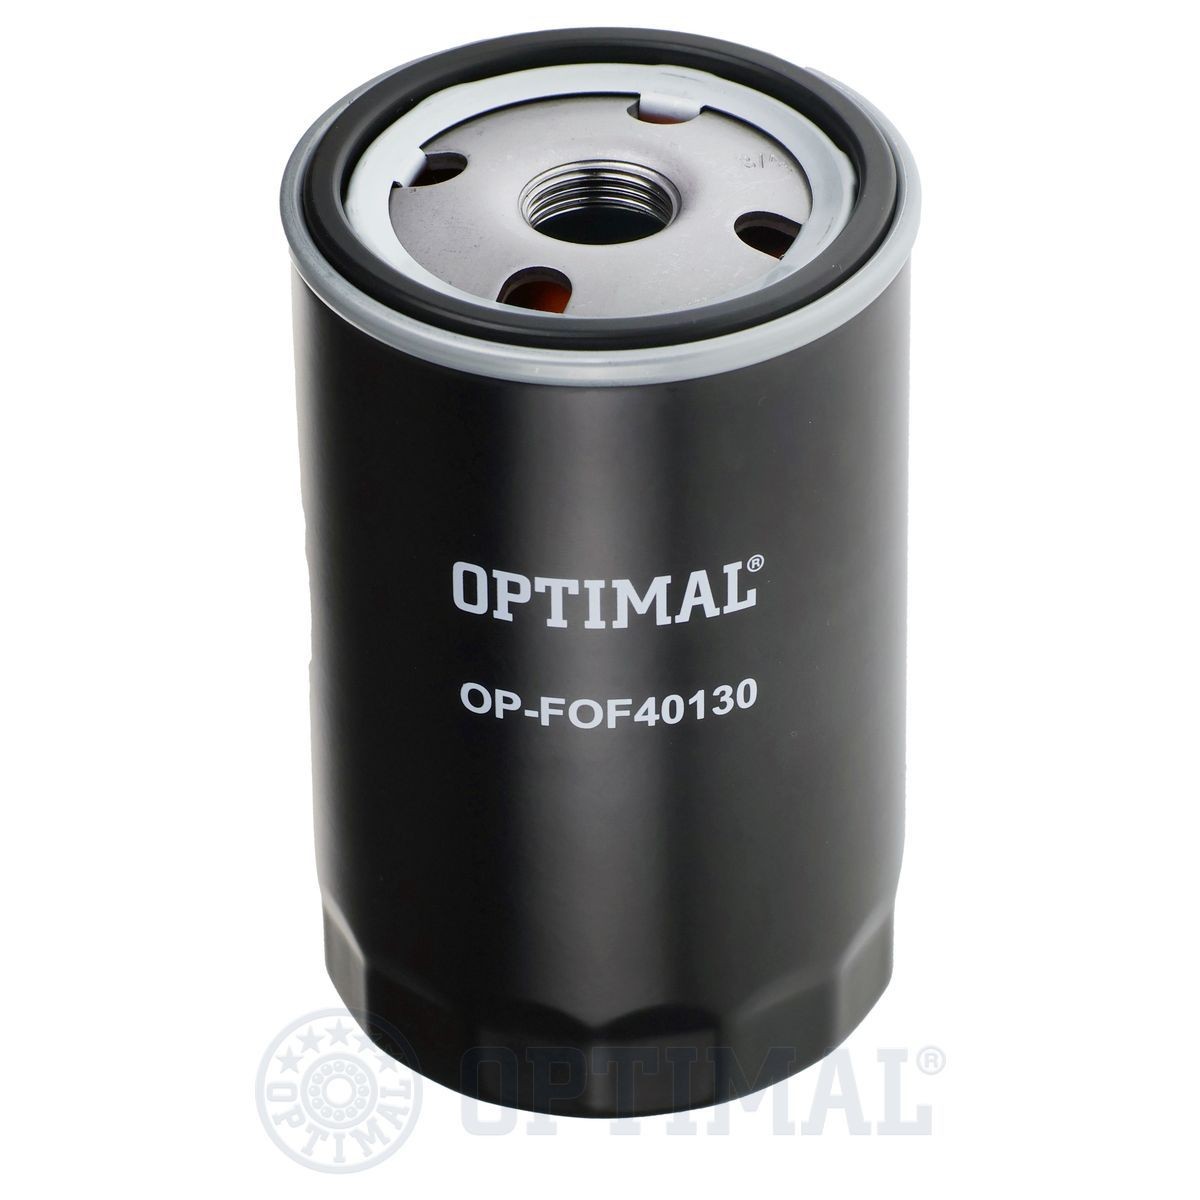 OPTIMAL OP-FOF40130 Oil filter 1031840201